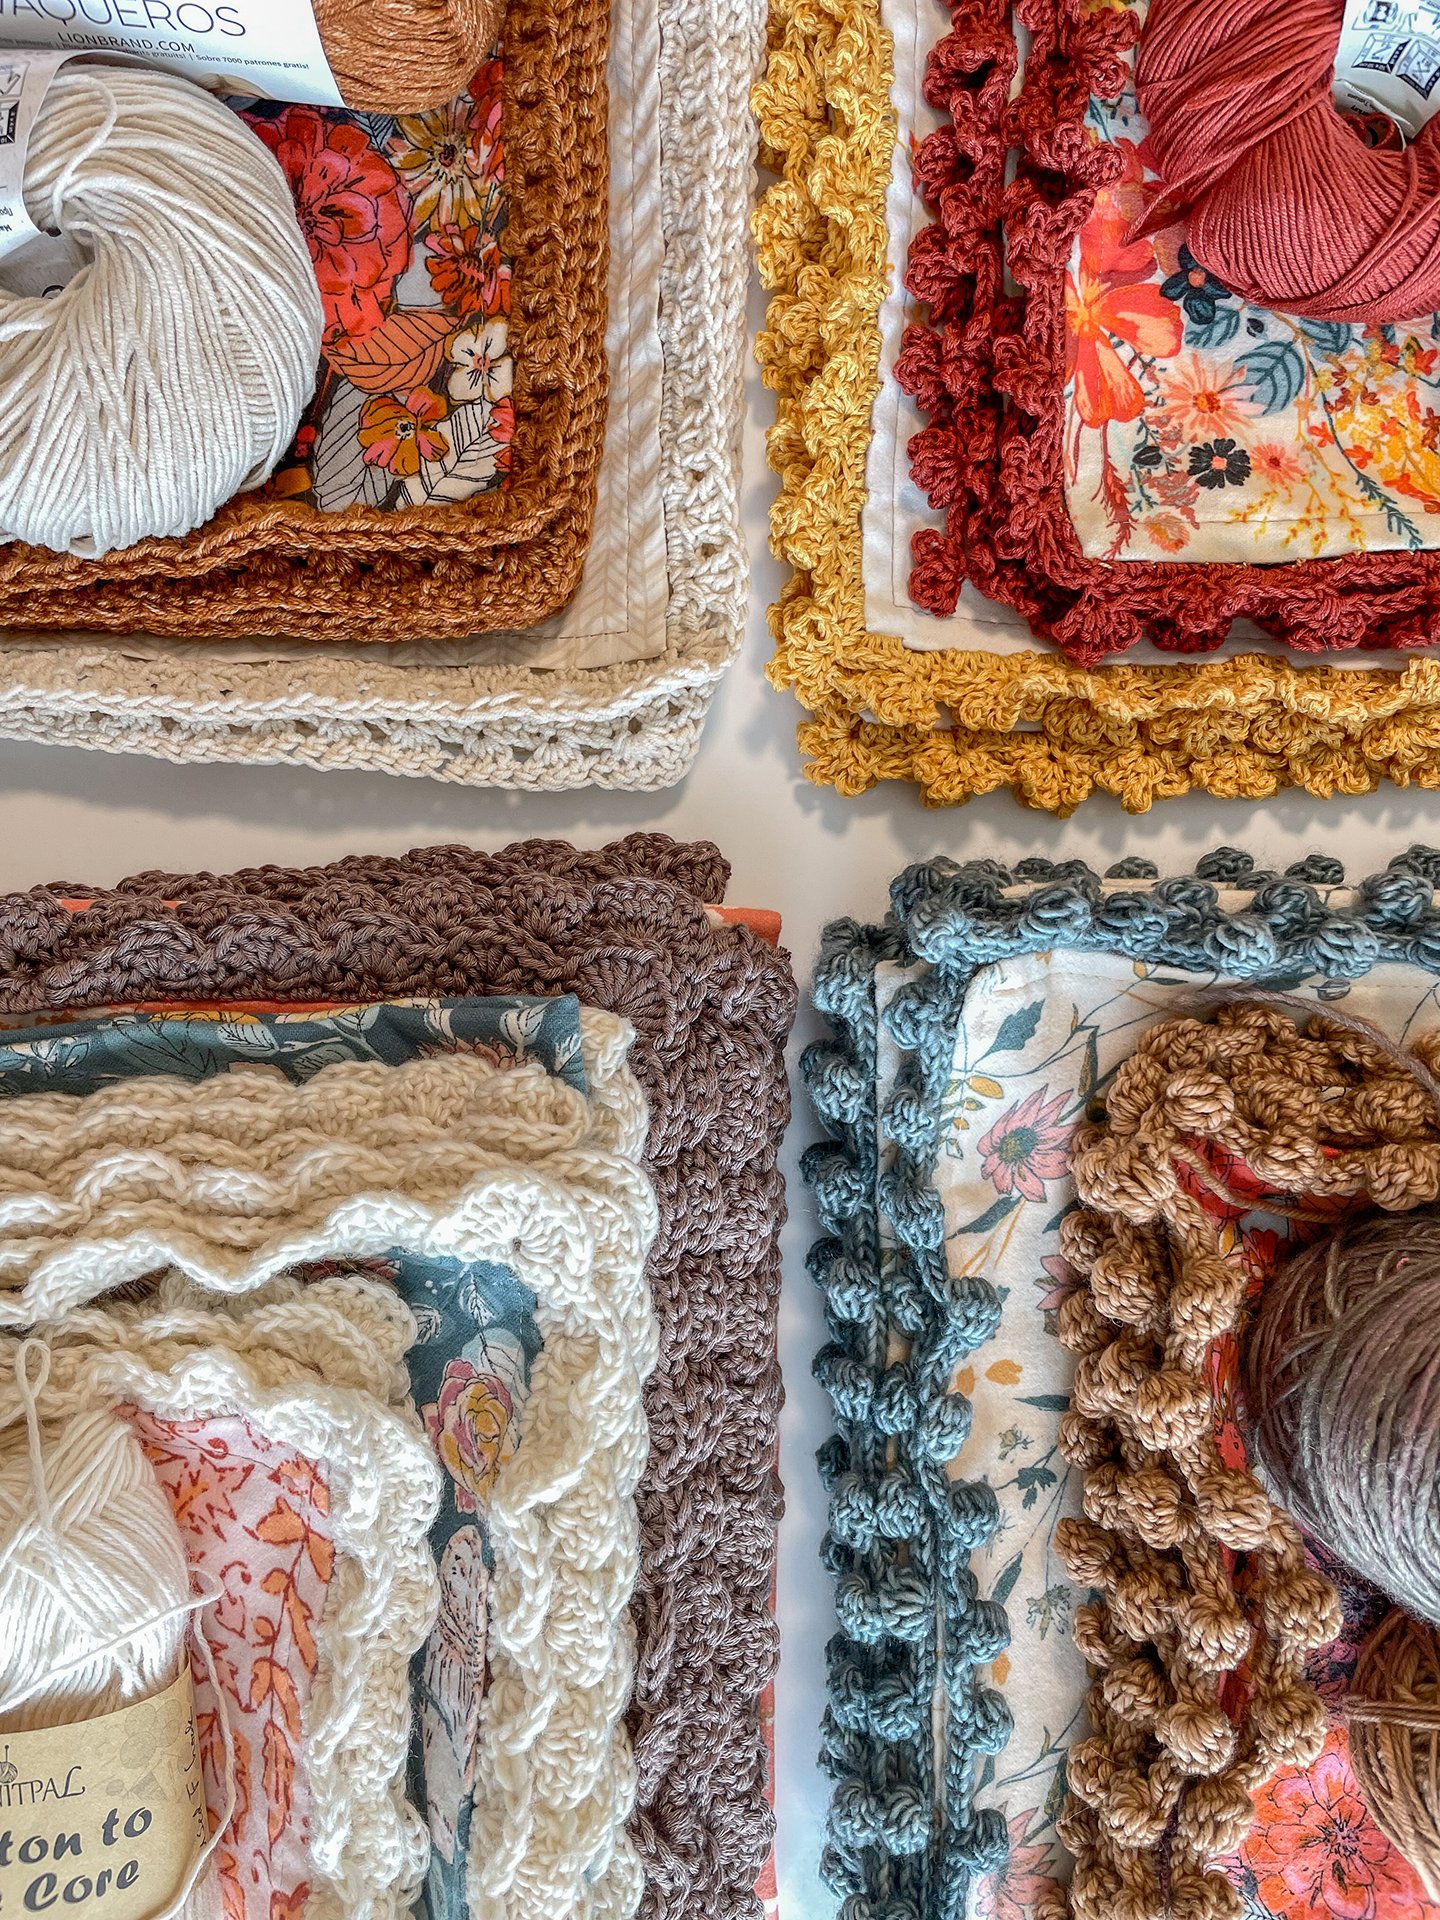 Crochet-Edge Blanket Workshop Part 1 — Sharon Holland Designs